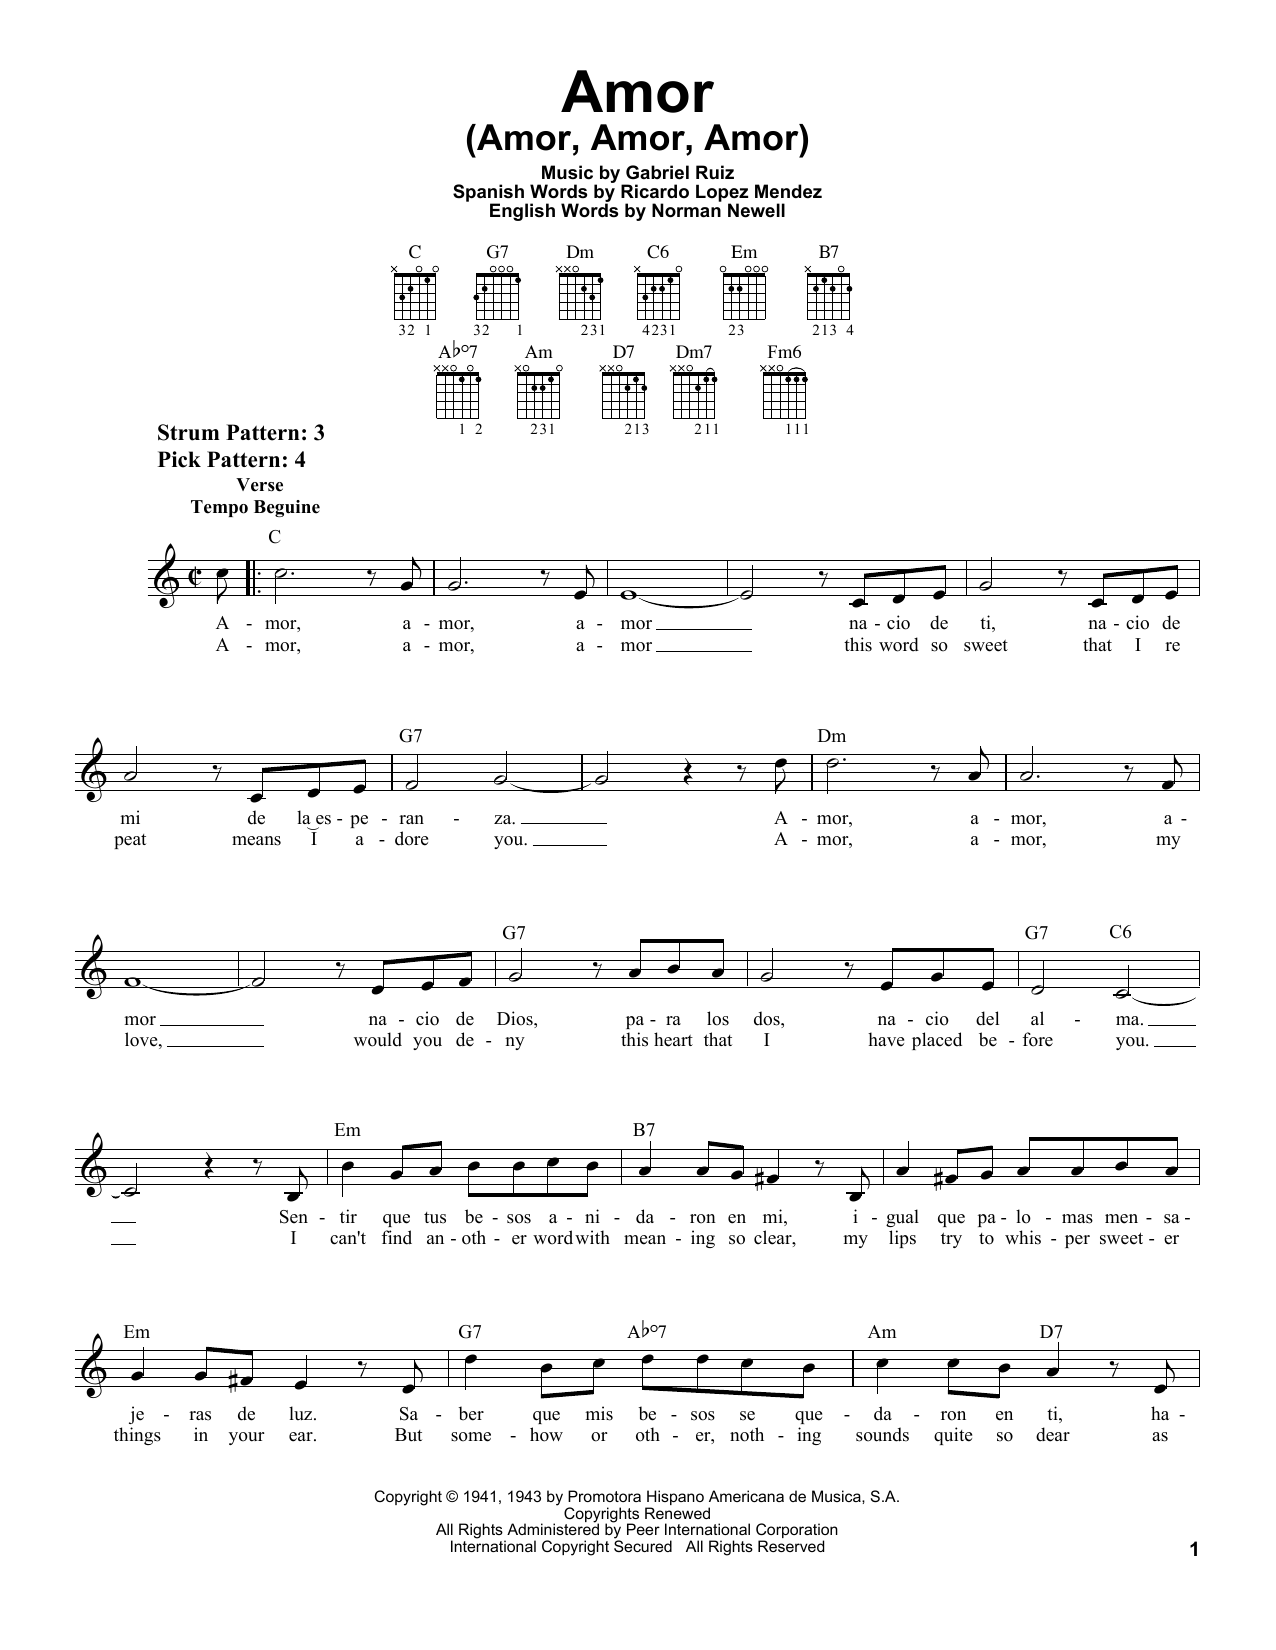 Gabriel Ruiz Amor (Amor, Amor, Amor) Sheet Music Notes & Chords for Accordion - Download or Print PDF